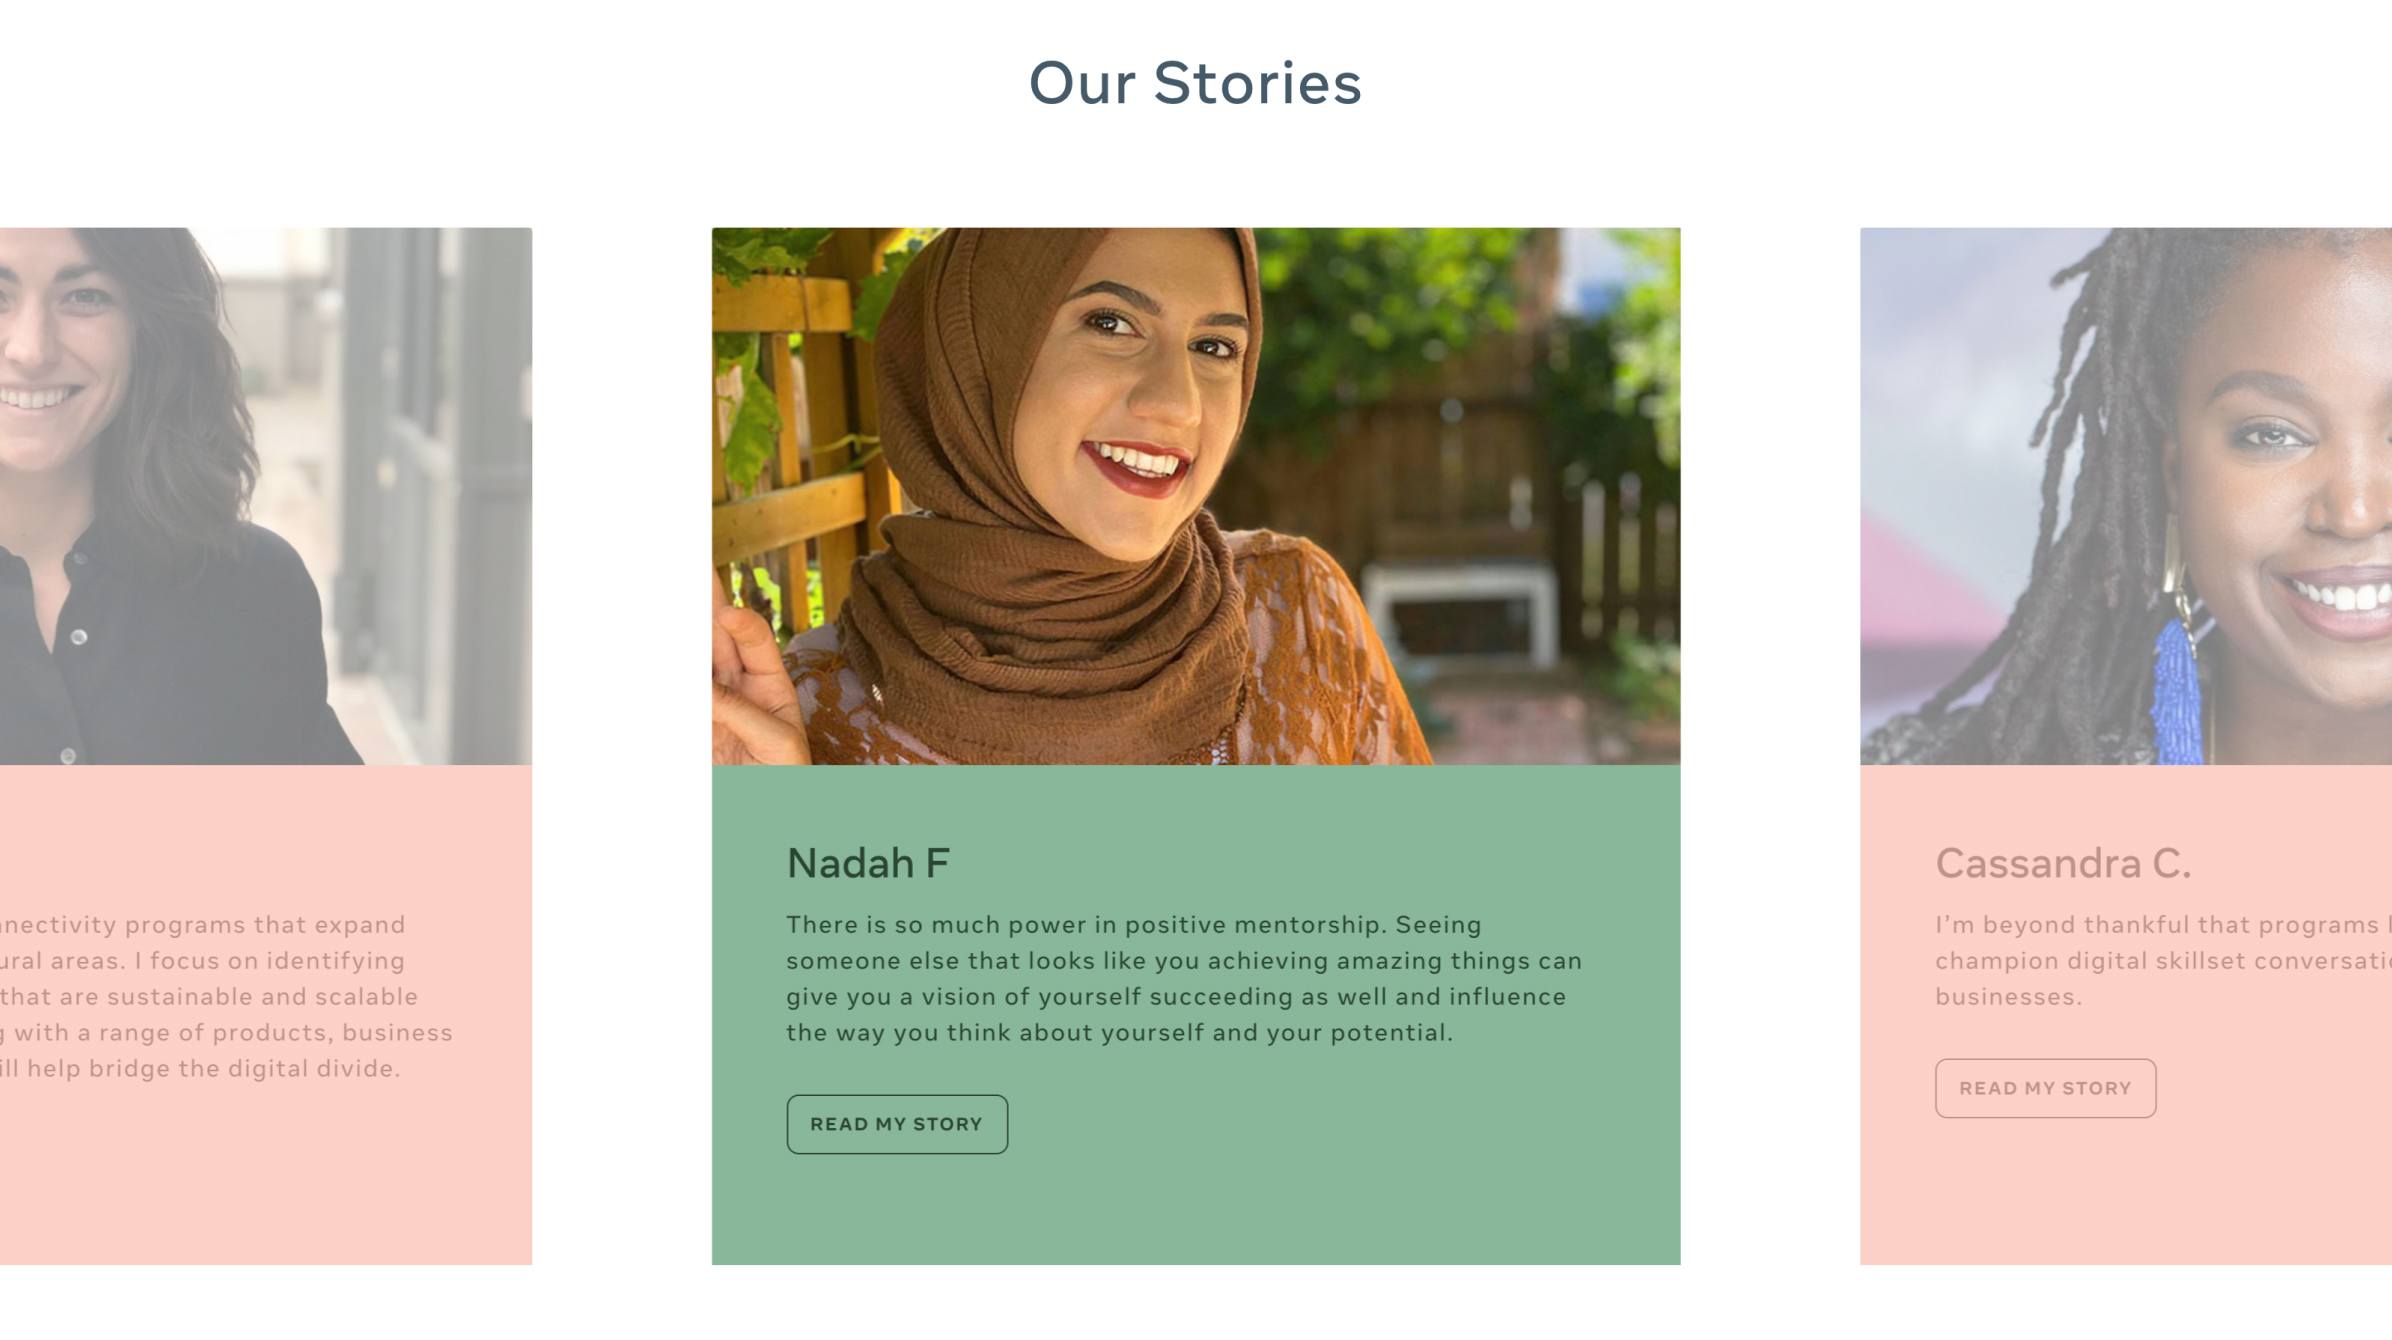 Human interest stories were at the heart of our website design effort for Facebook.